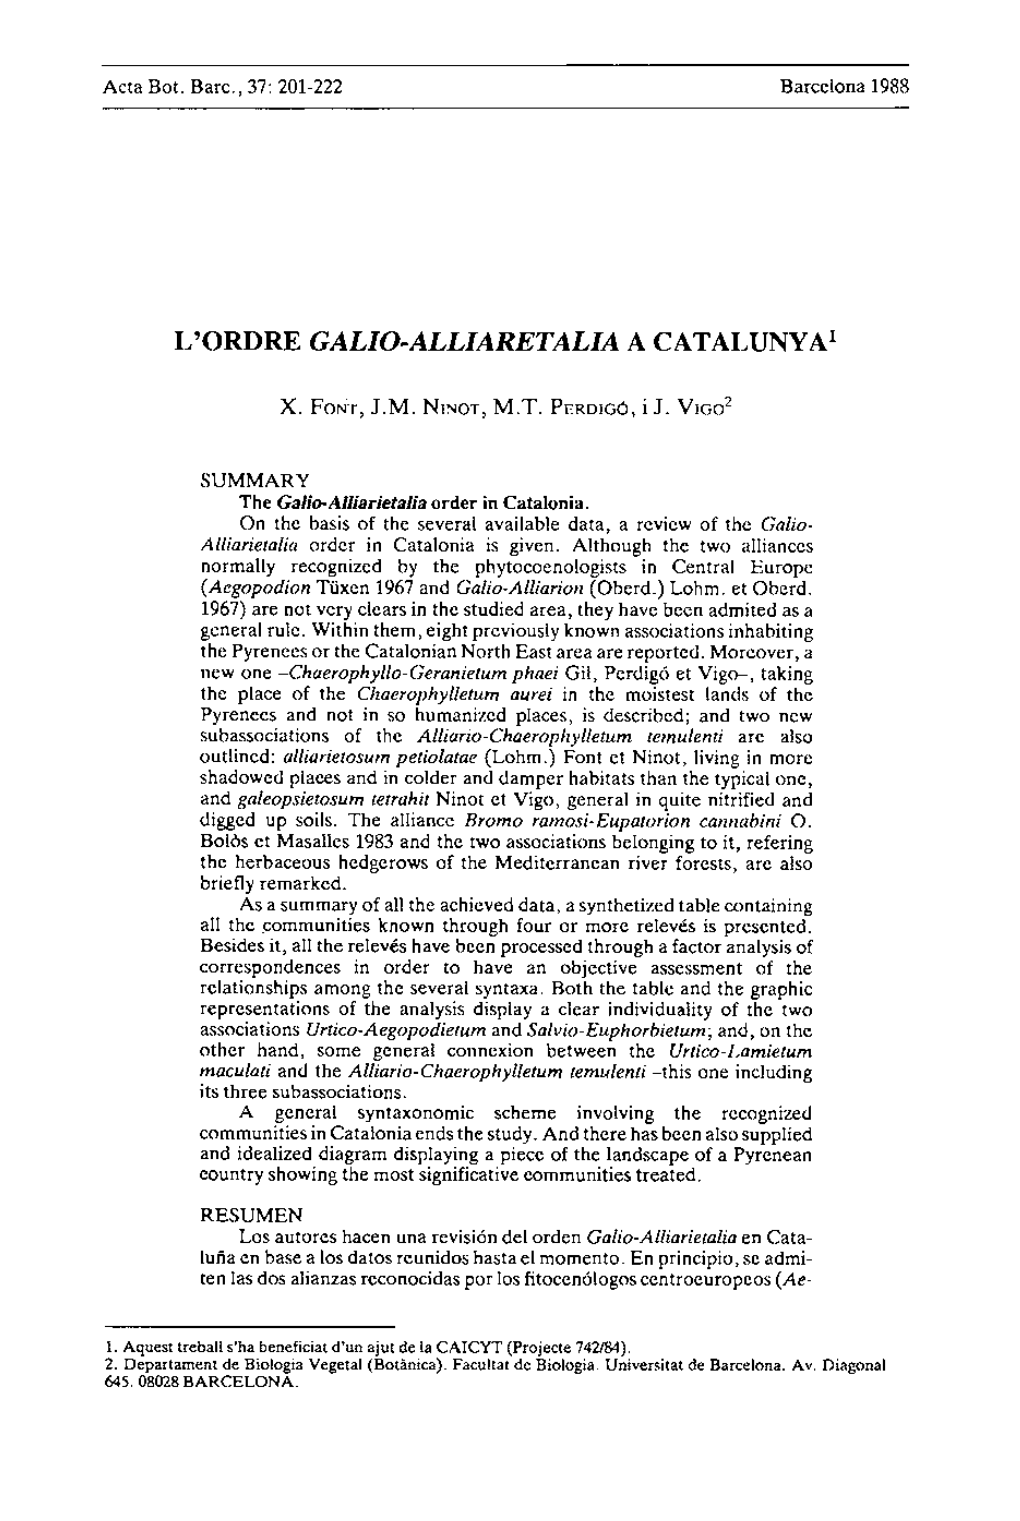 L'ordre Galio-Alliaretalia a Catalunya1